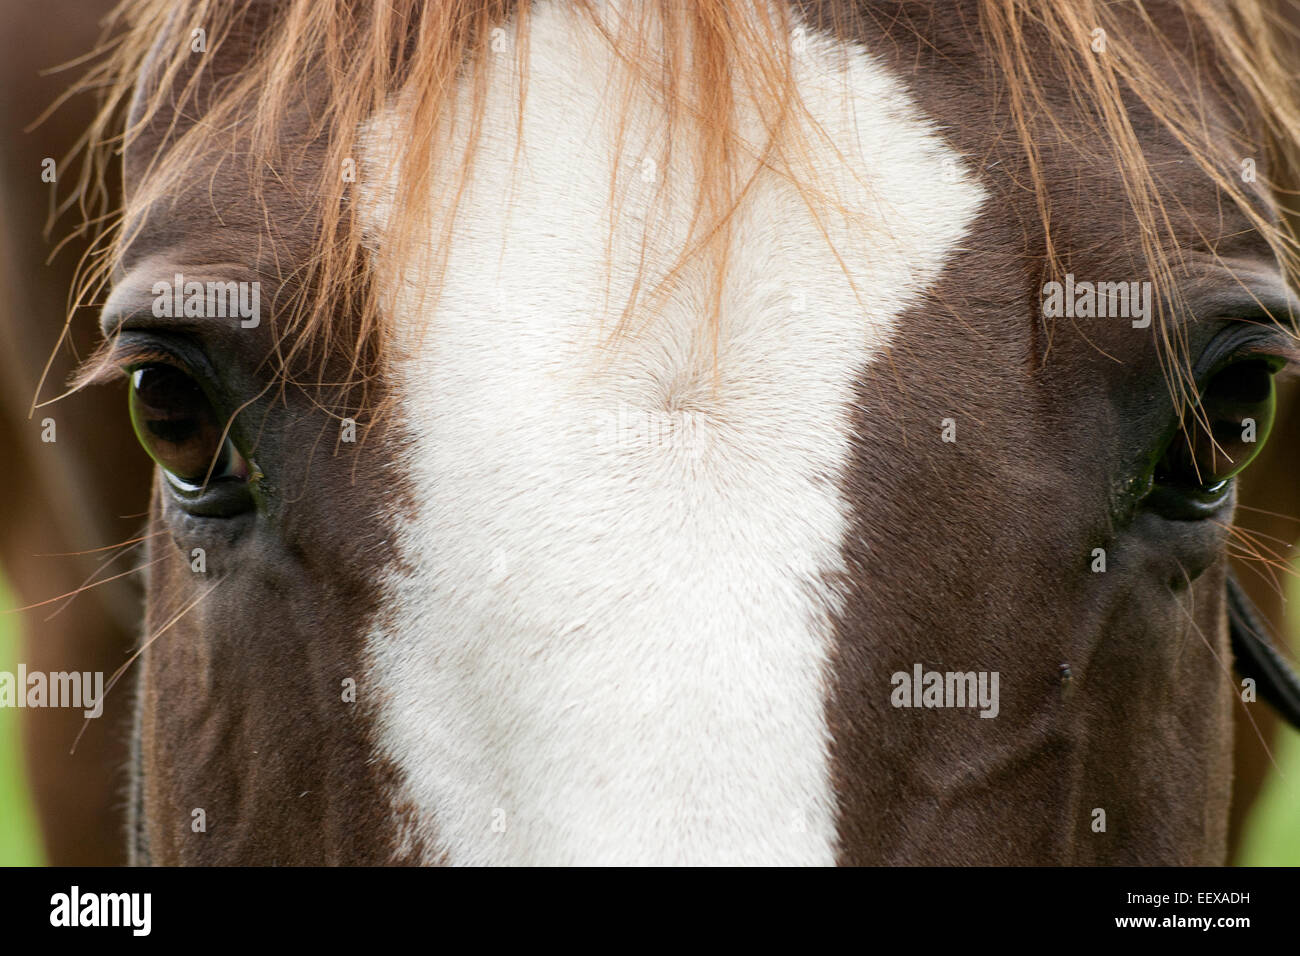 Horses face close up Stock Photo